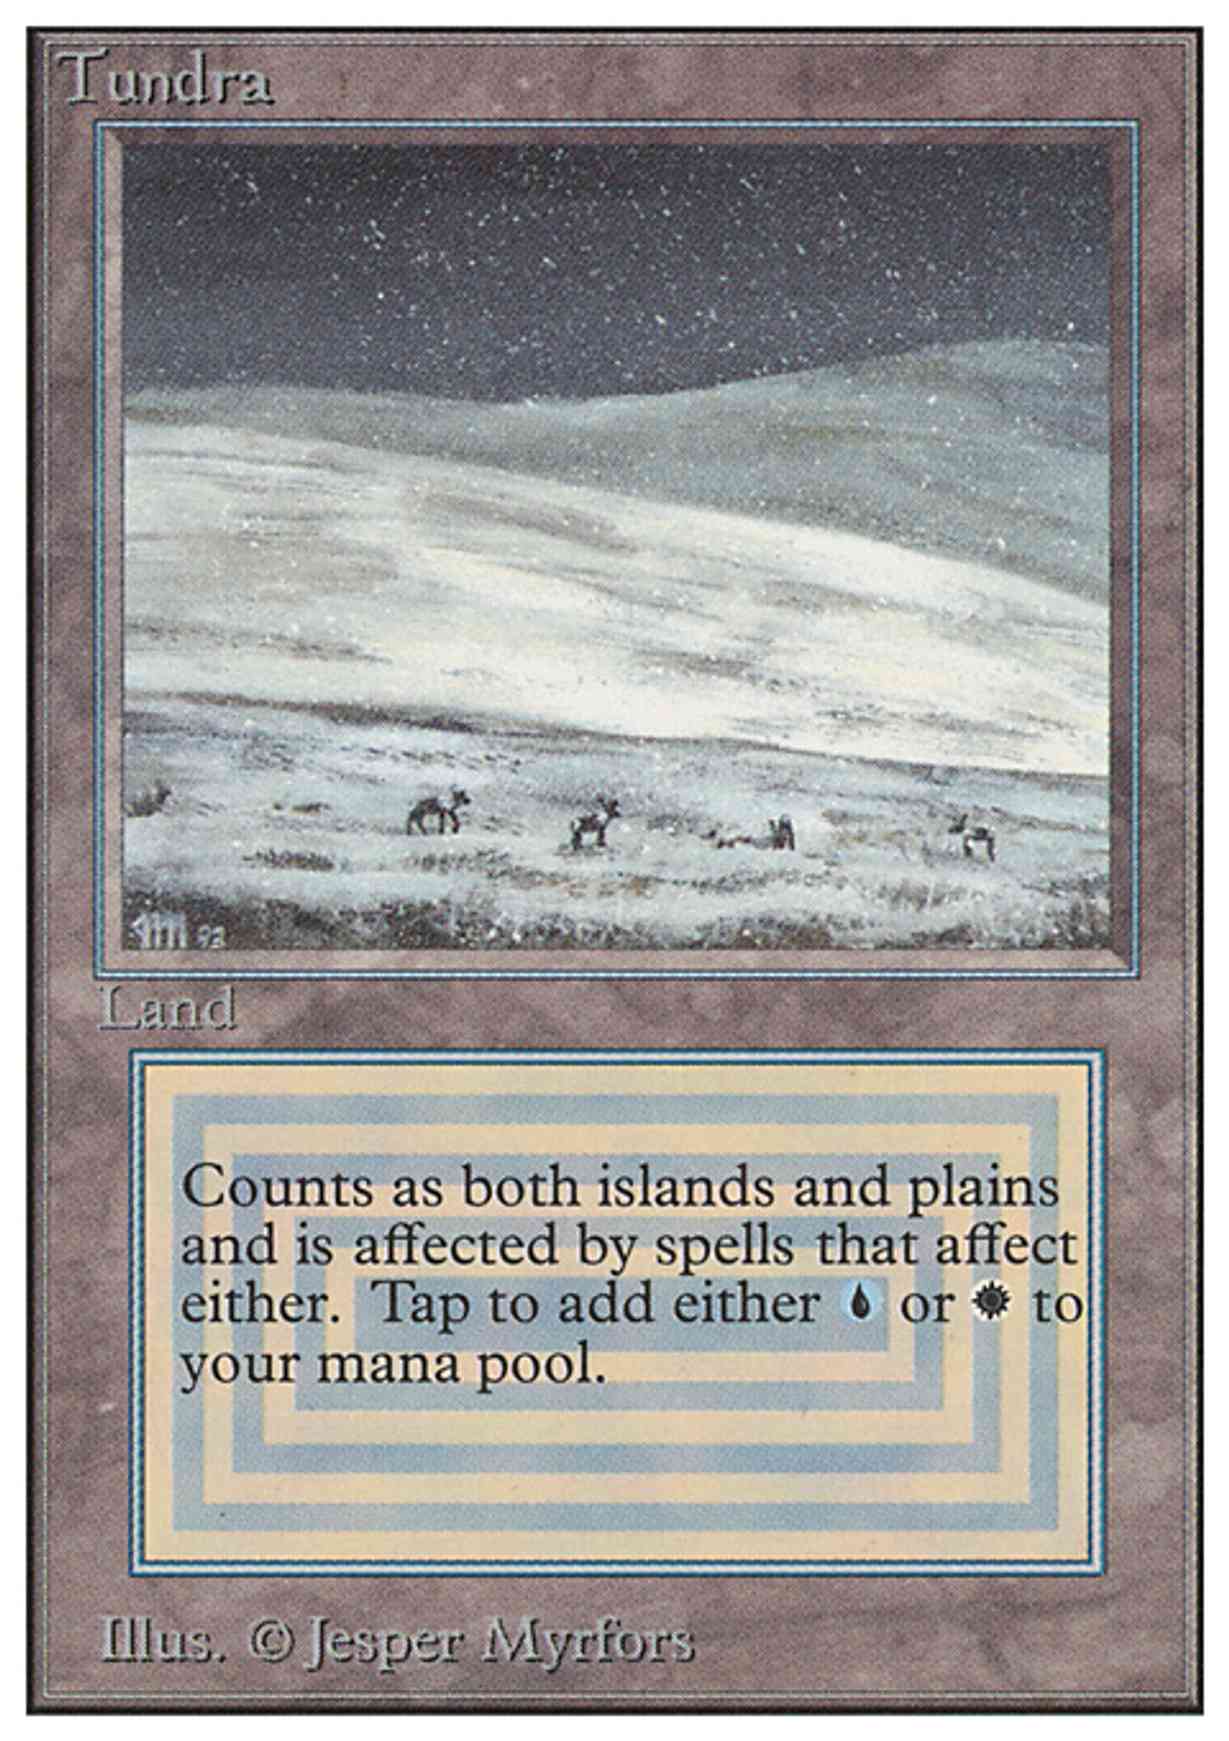 Tundra magic card front